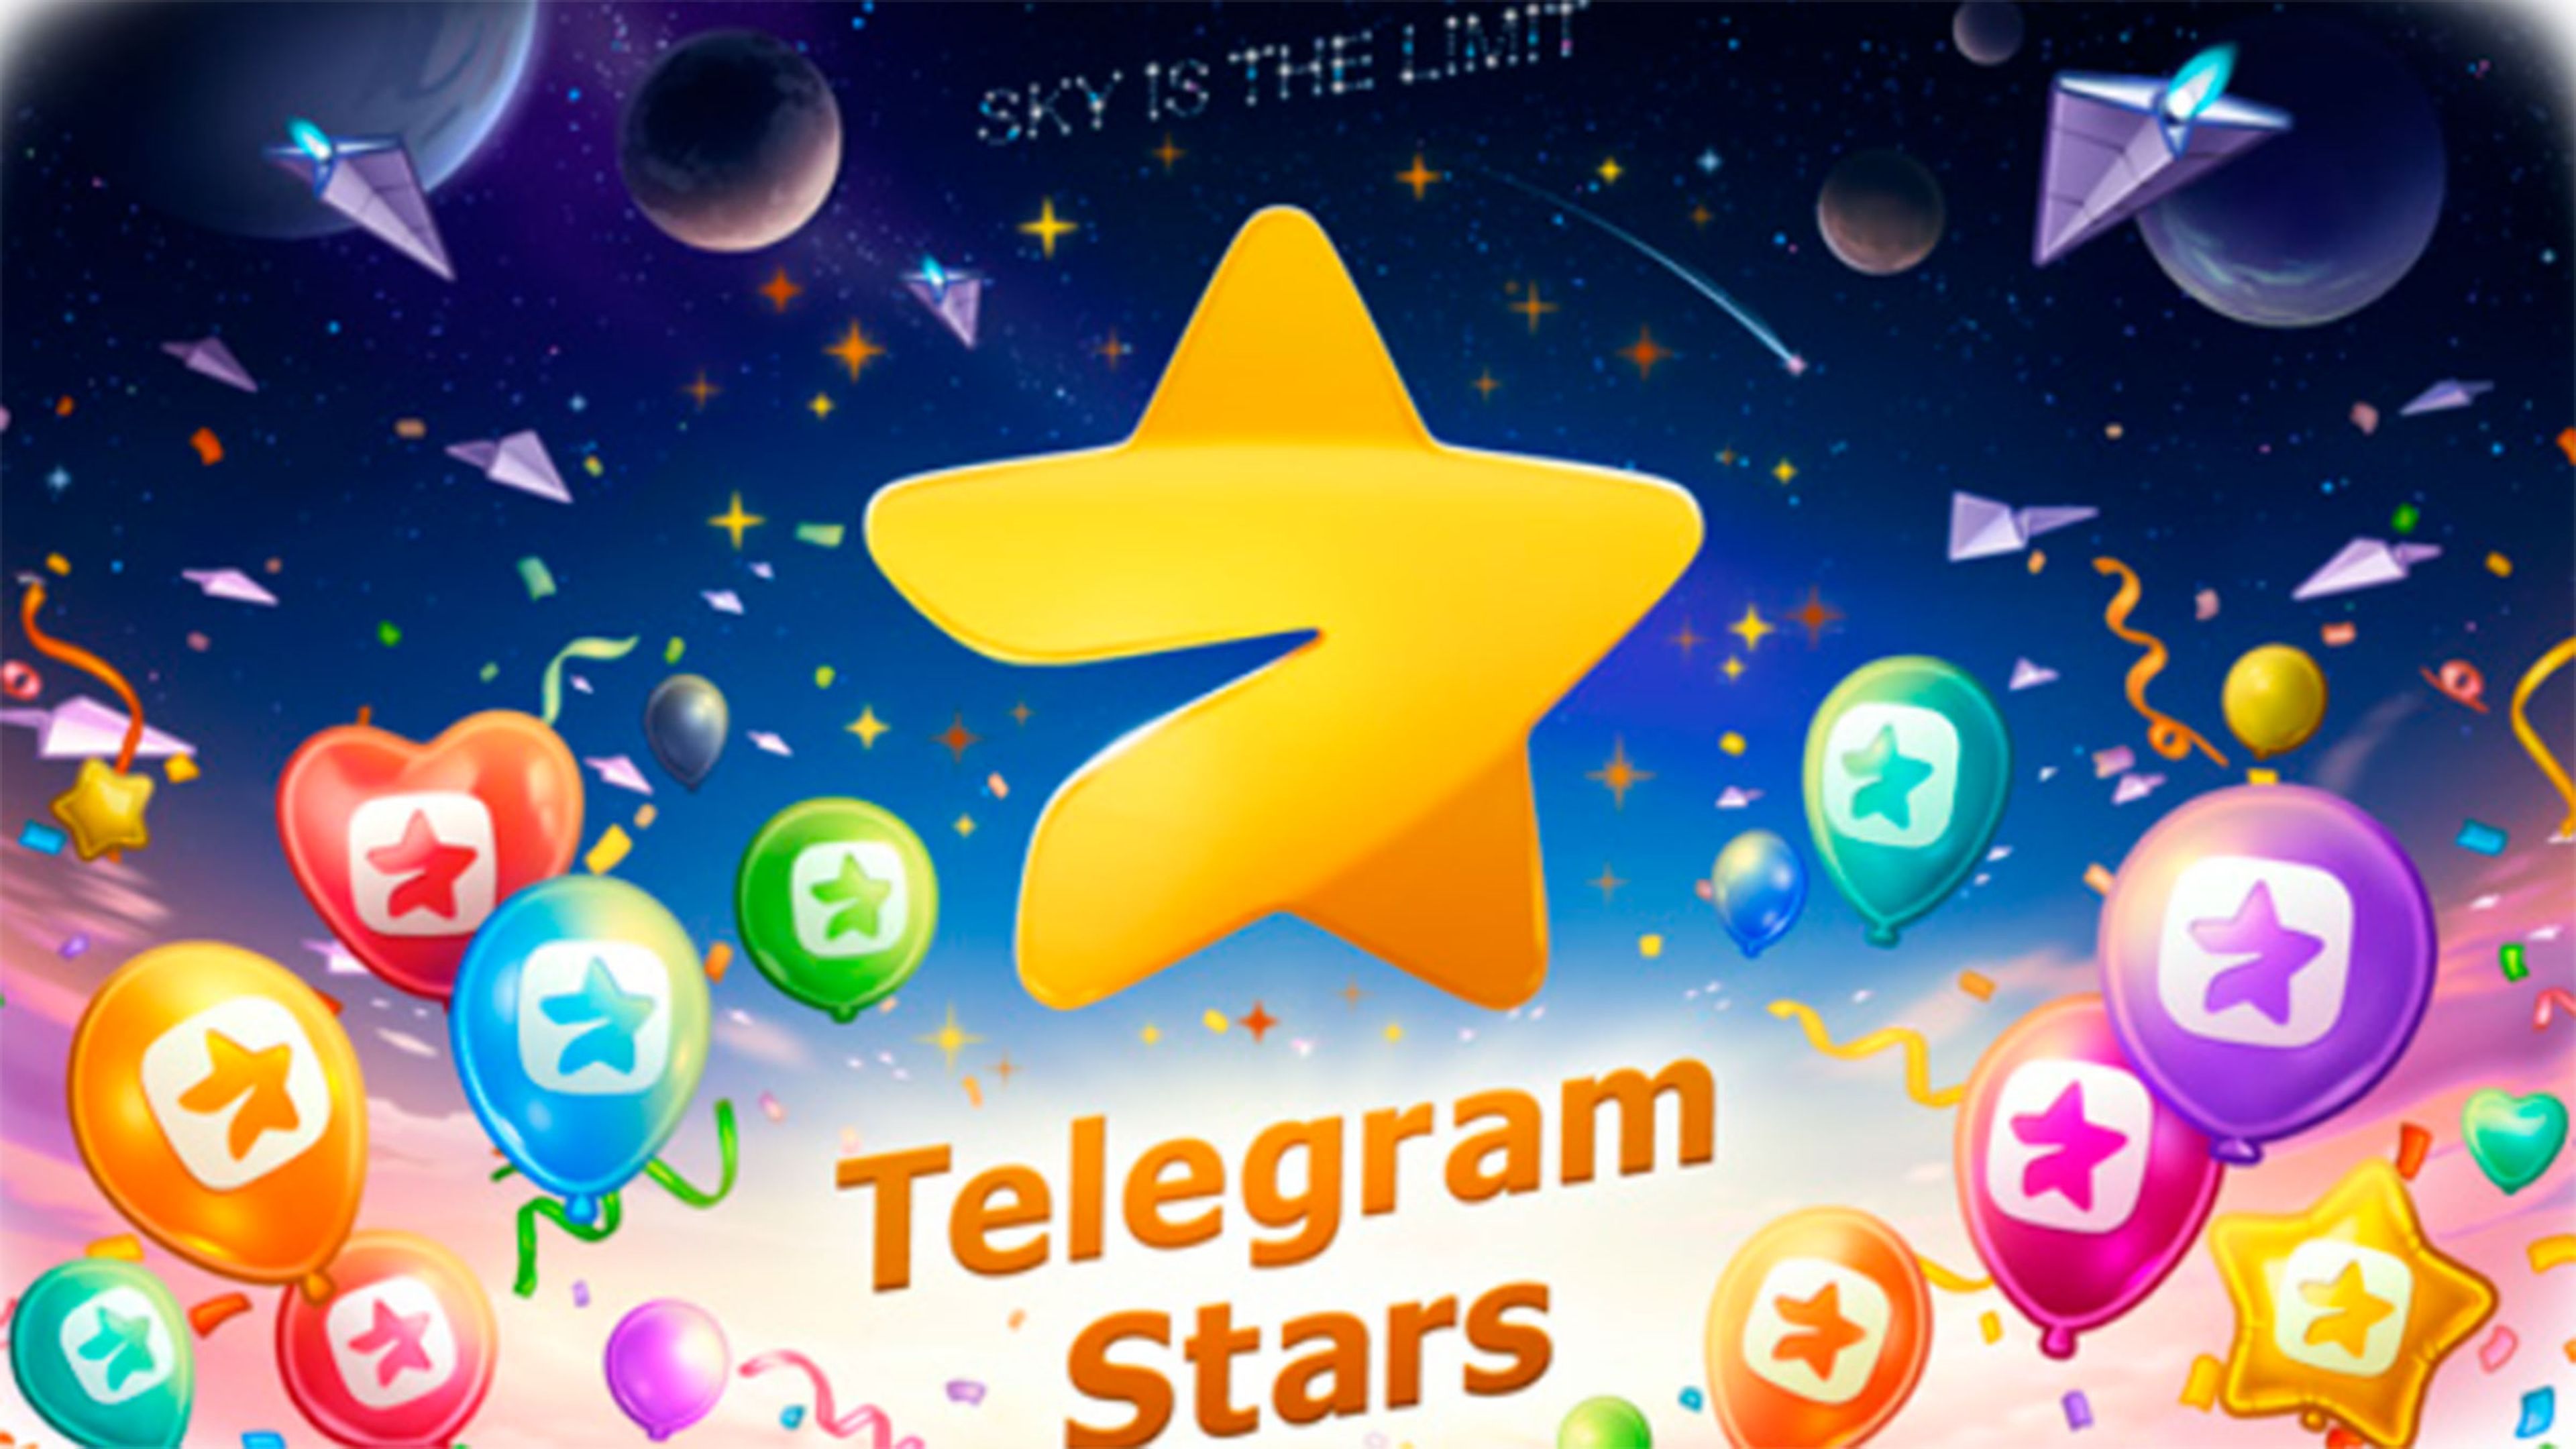 Telegram Stars